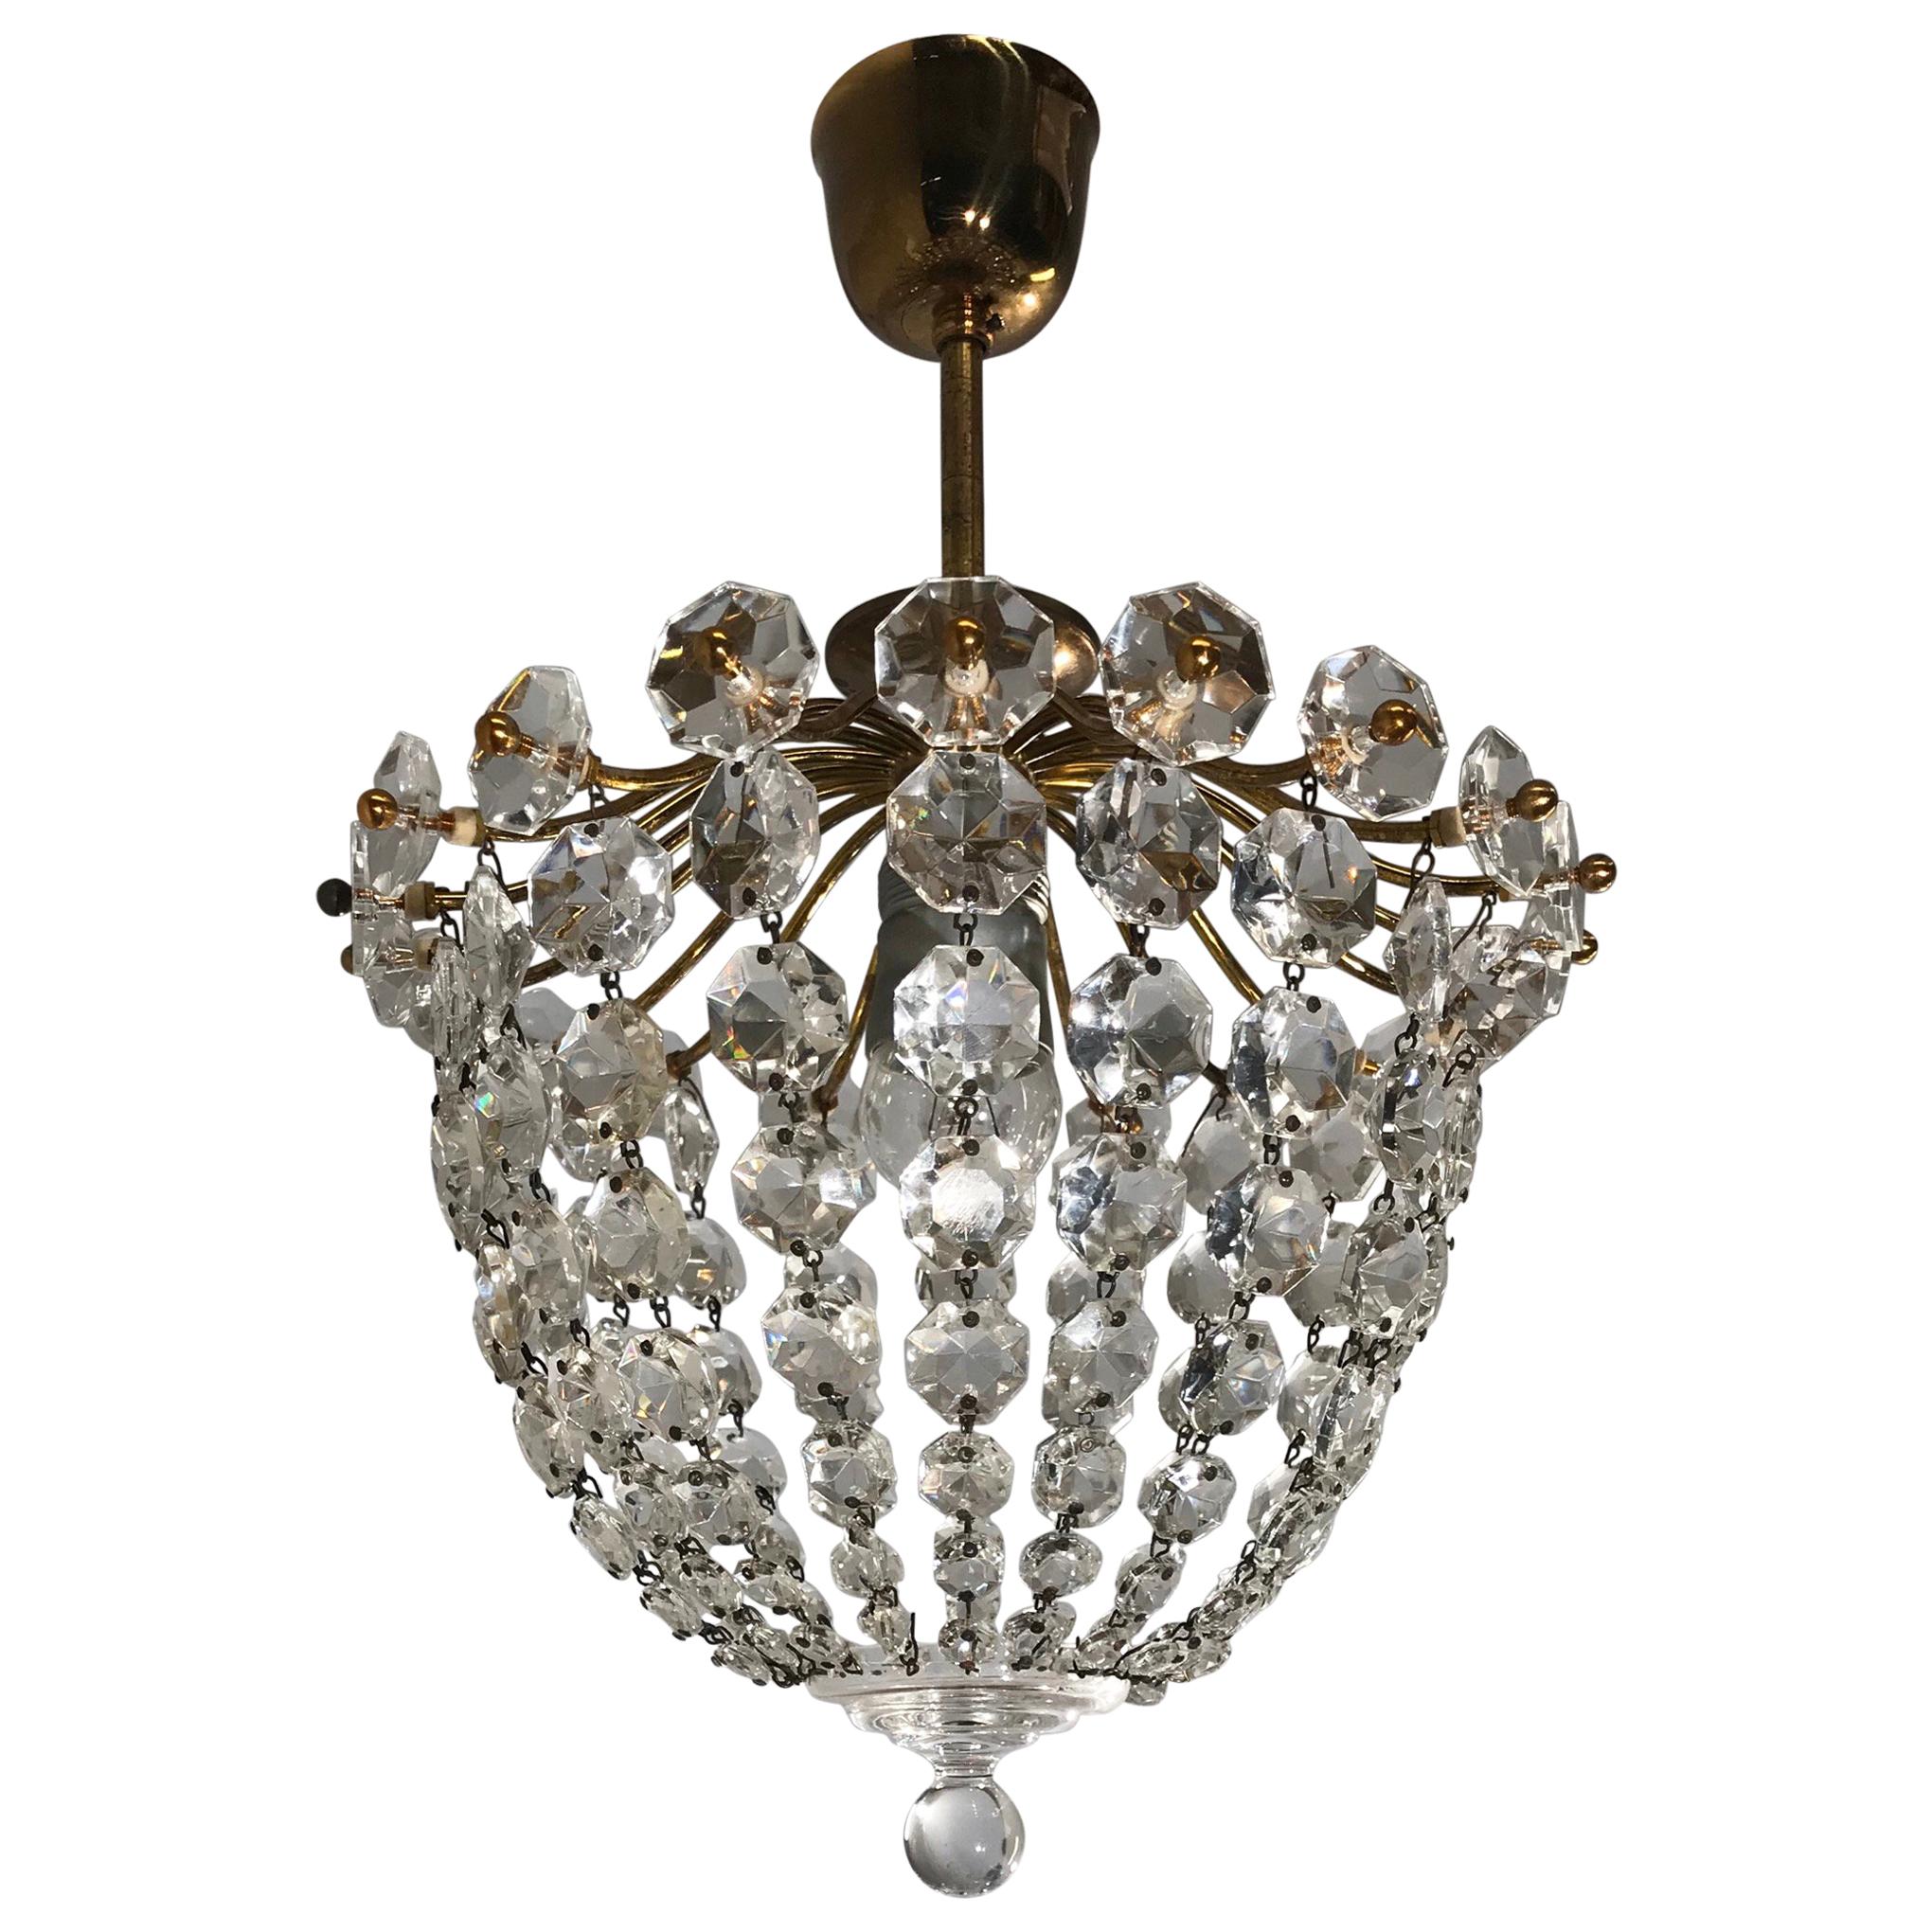 Stylish Little Midcentury Brass and Crystal Glass Murano Pendant Light Fixture